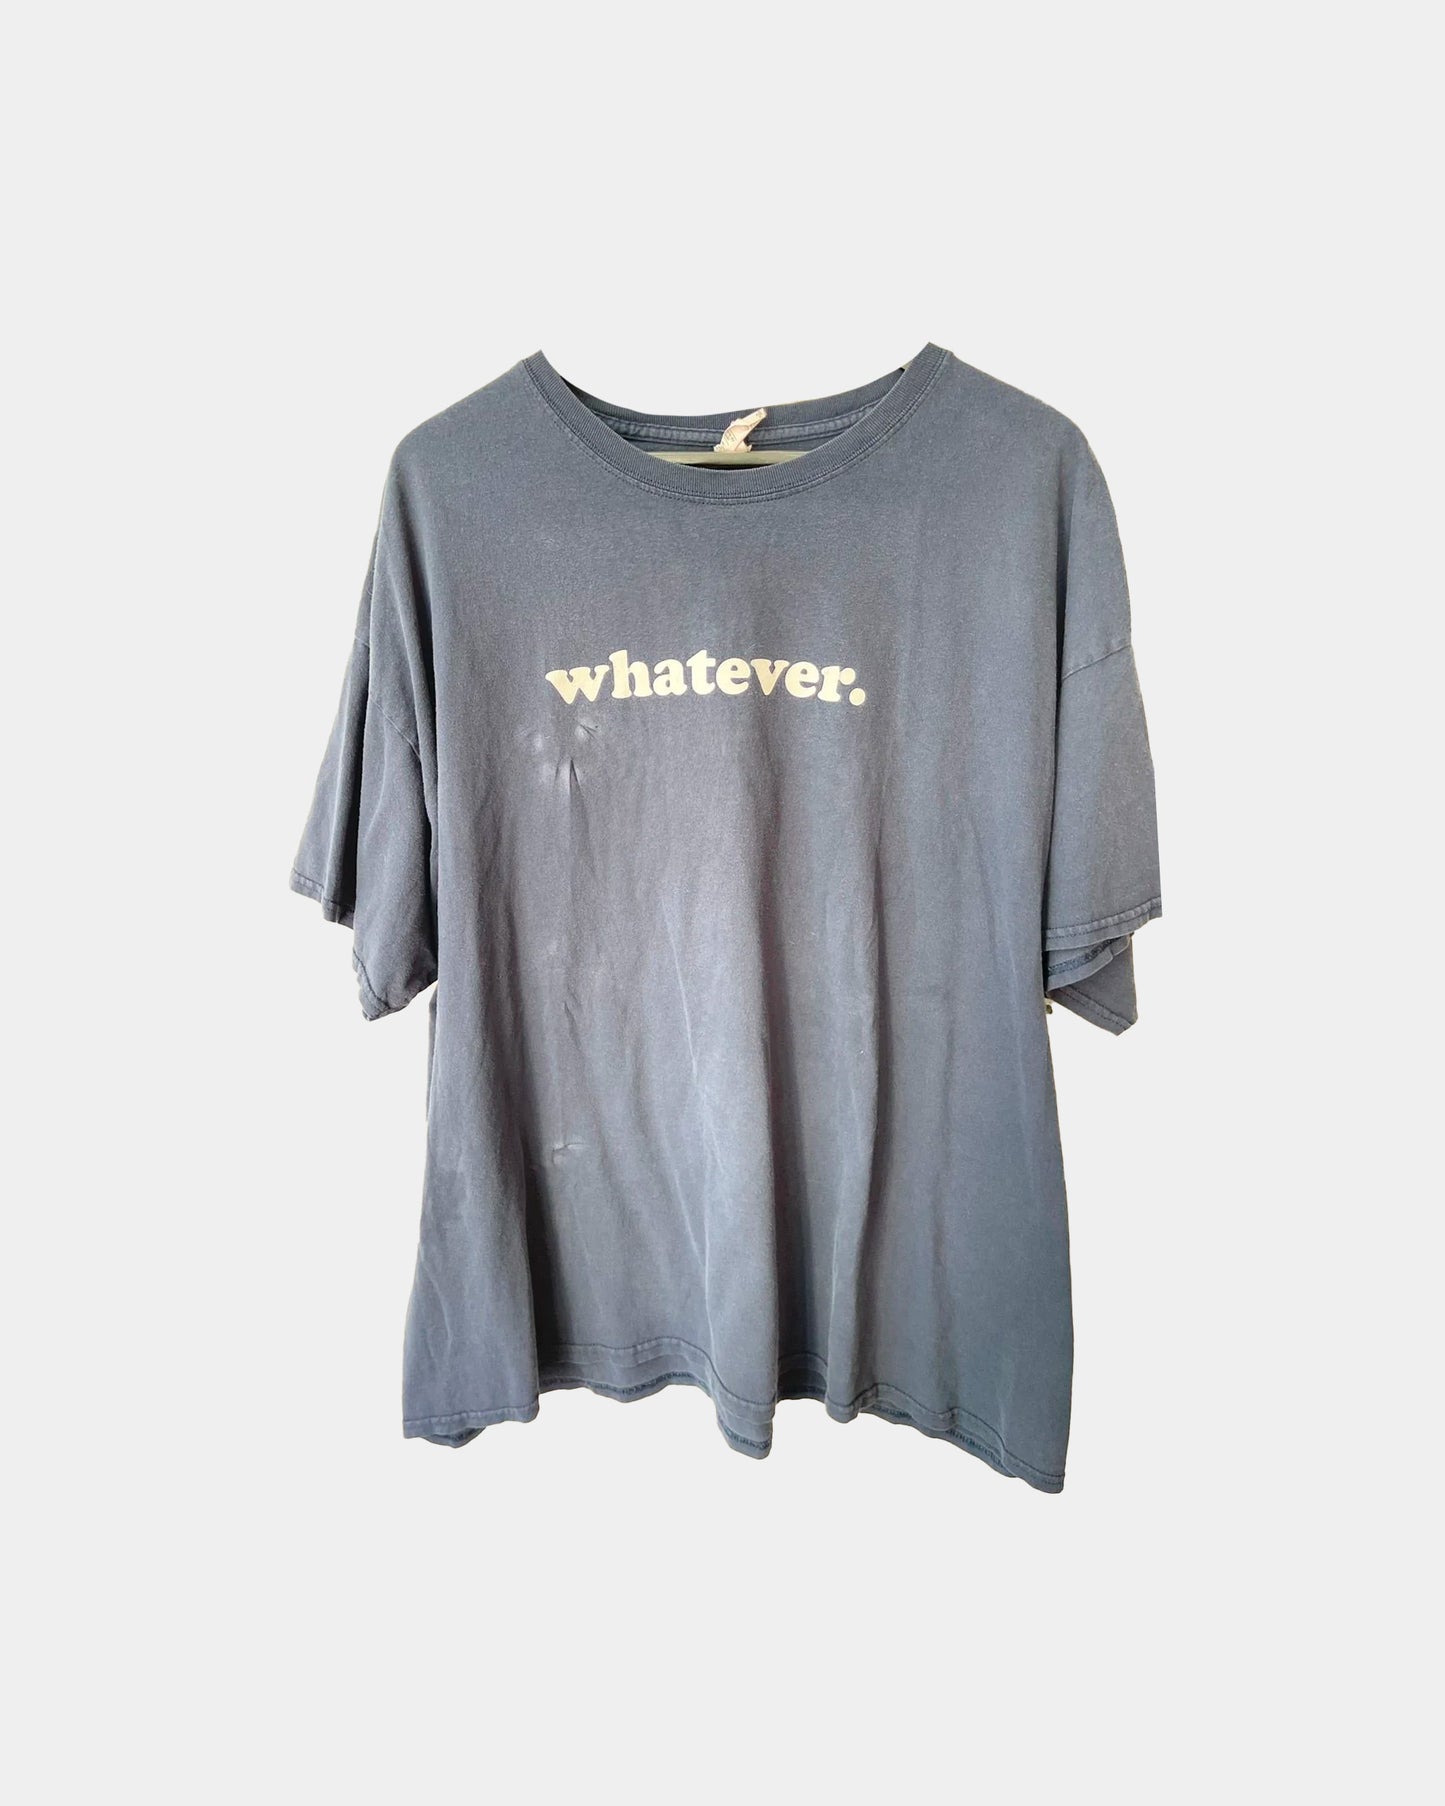 Vintage WHATEVER. Shirt Fuck off THRASHED